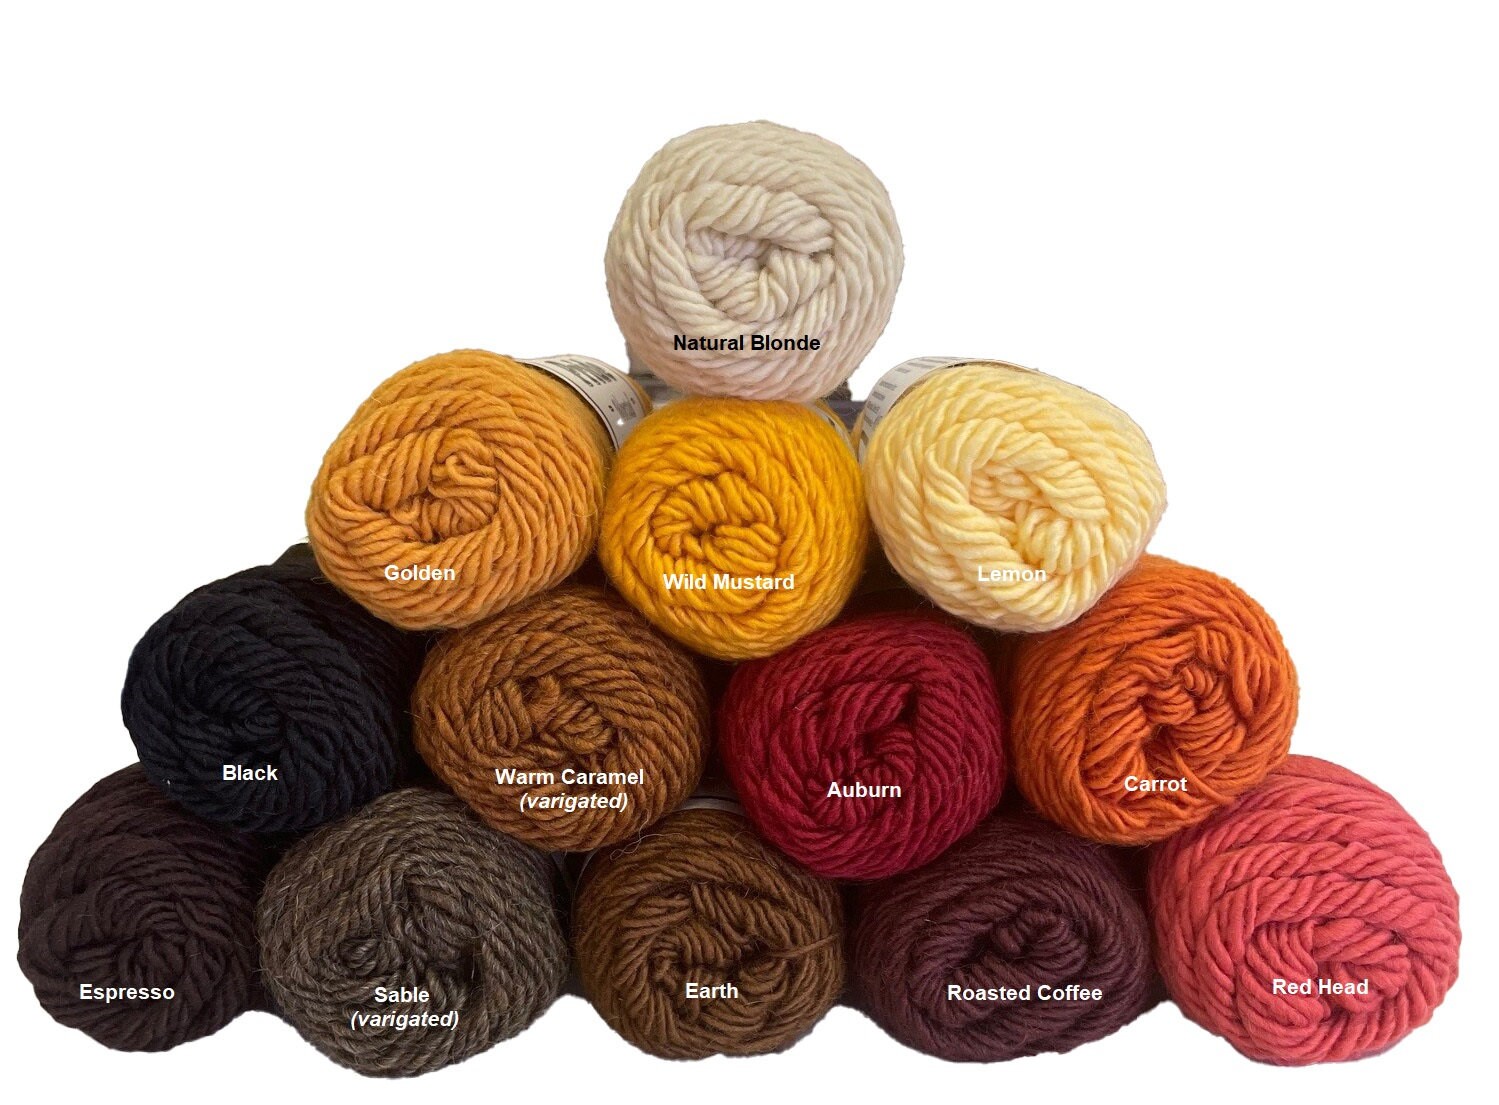 Weir Crafts Ecosoft Wool roving for Felting - 1 Full Ounce Peach